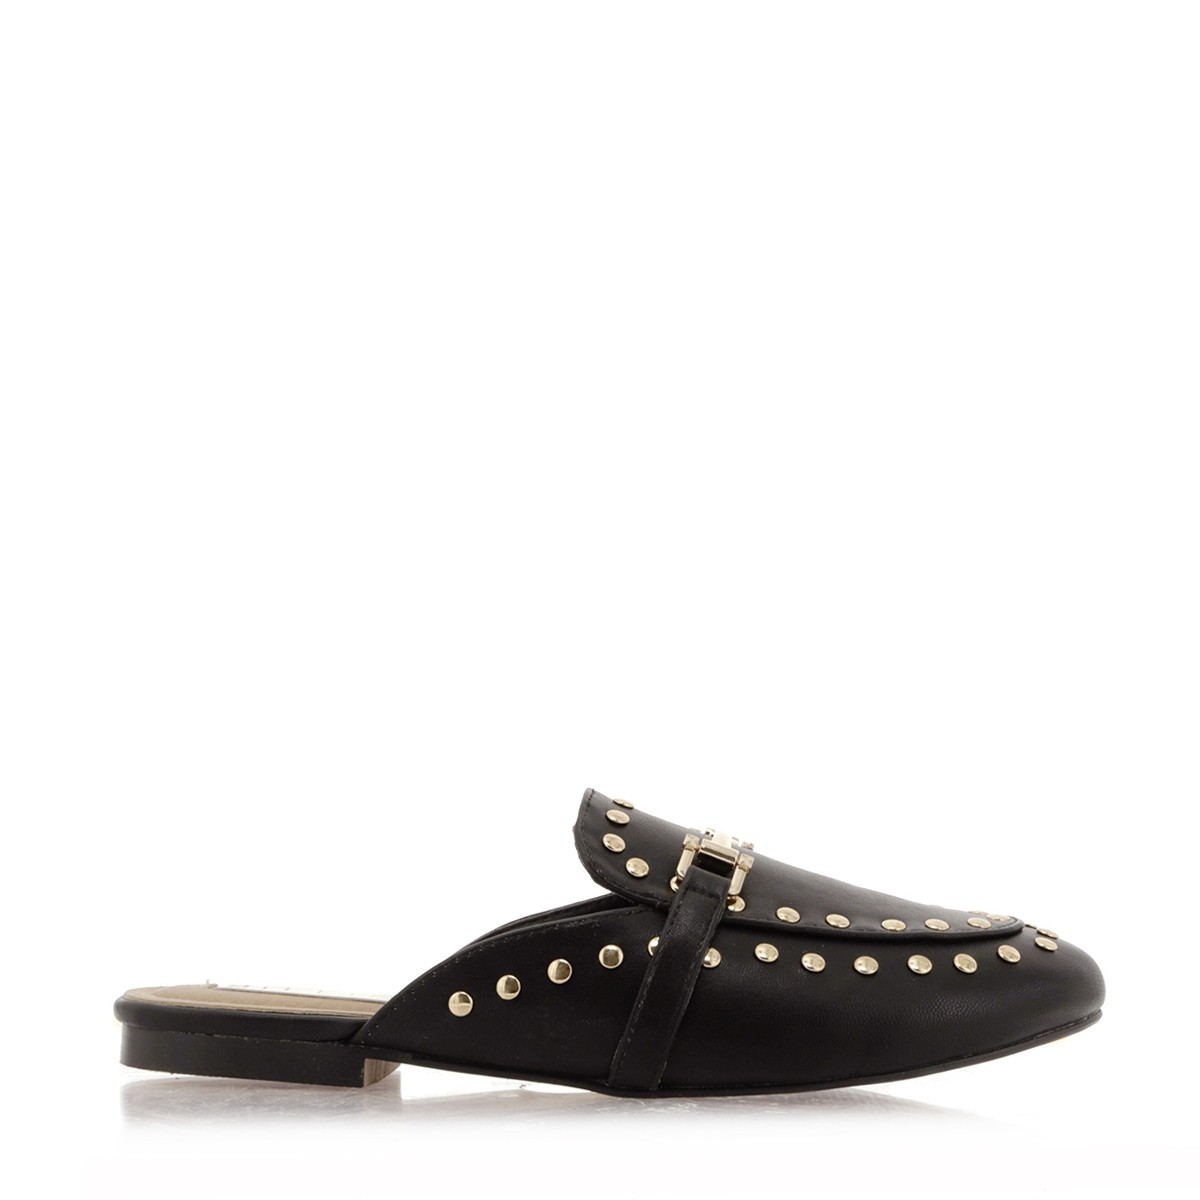 Nappa Black by Billini Shoes on Sale | ShoeSales